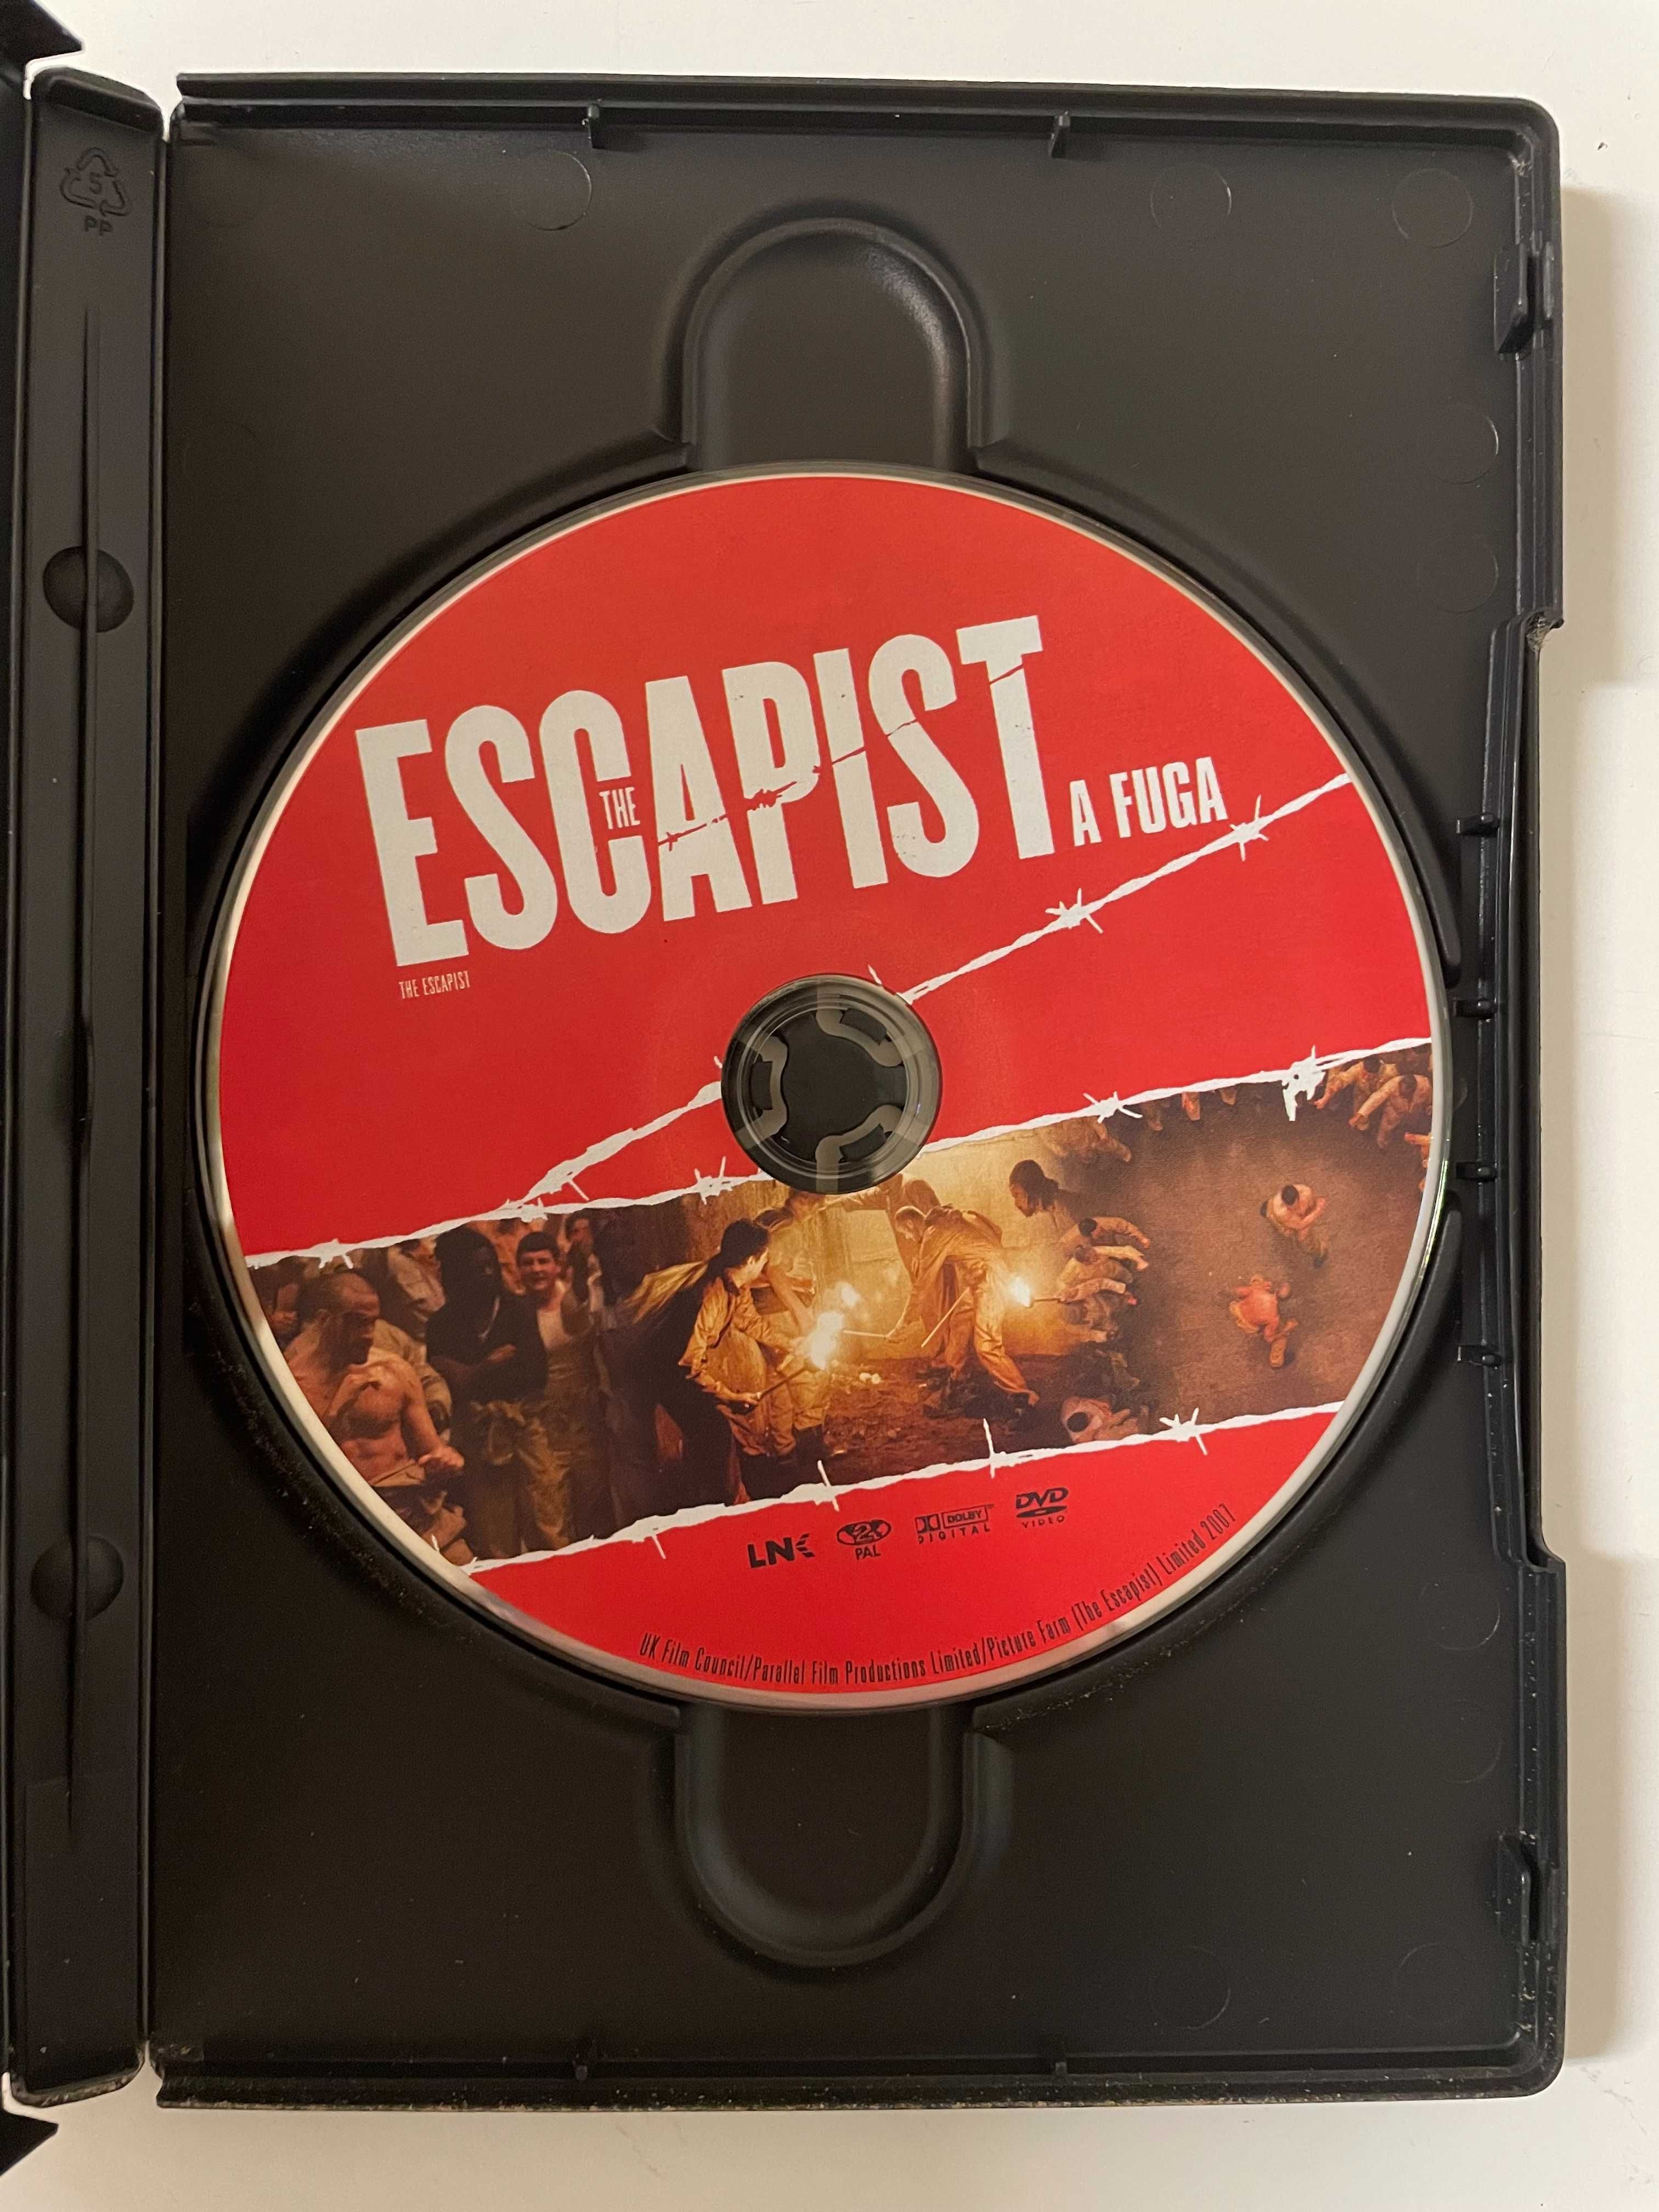 The escapist: a fuga / The escapist